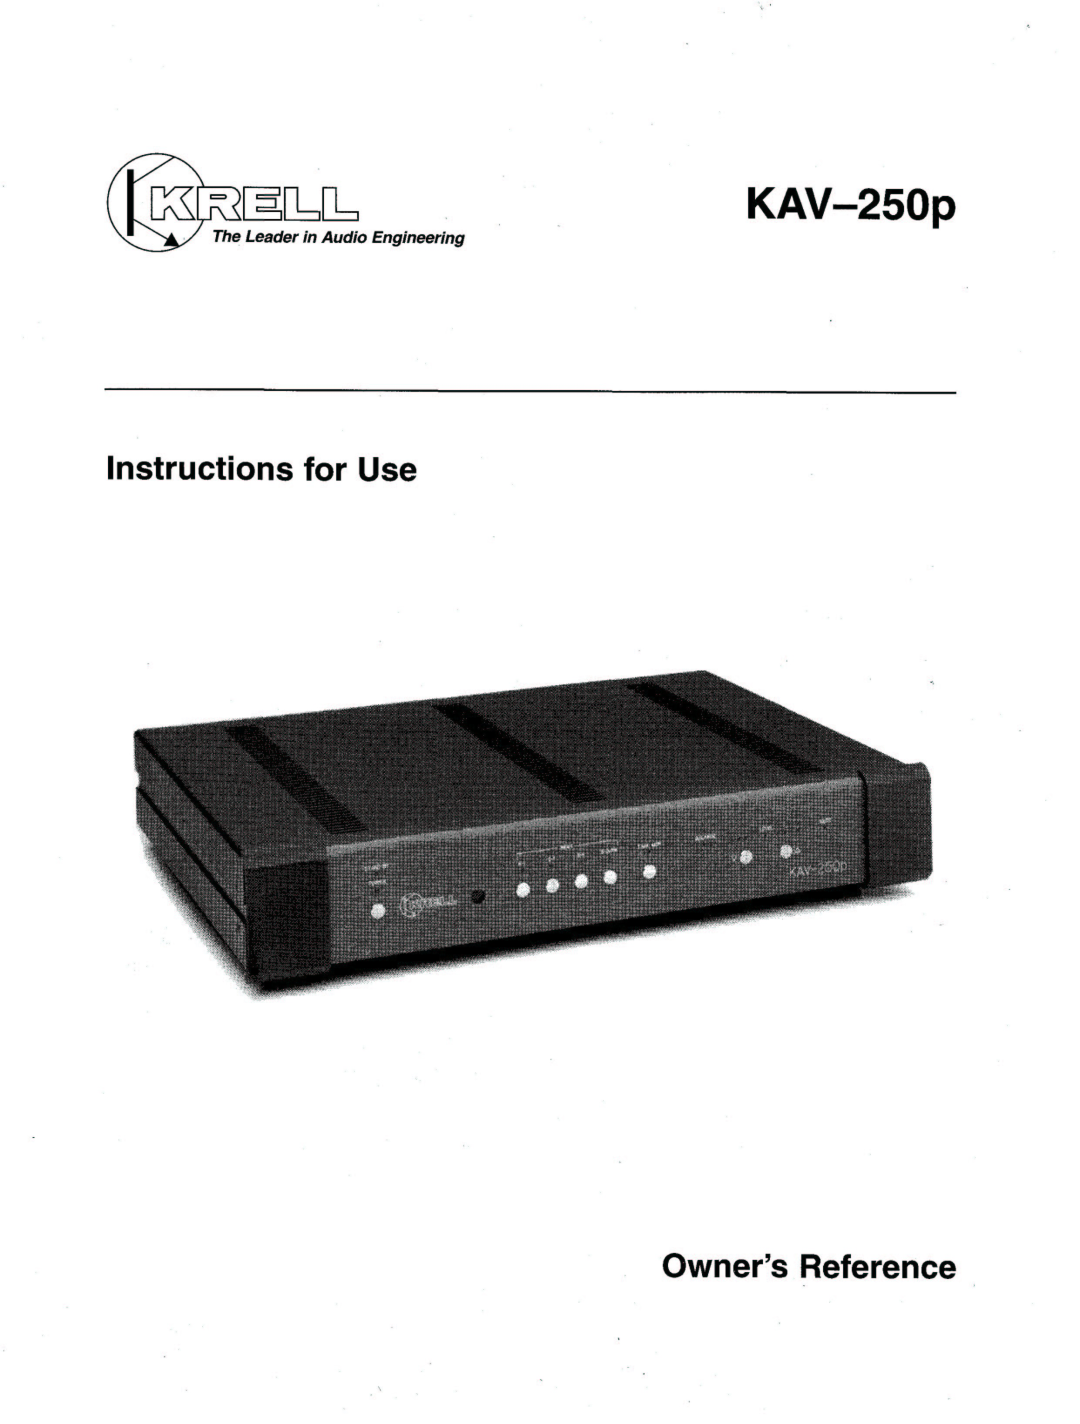 Krell Industries KAV-250p manual 